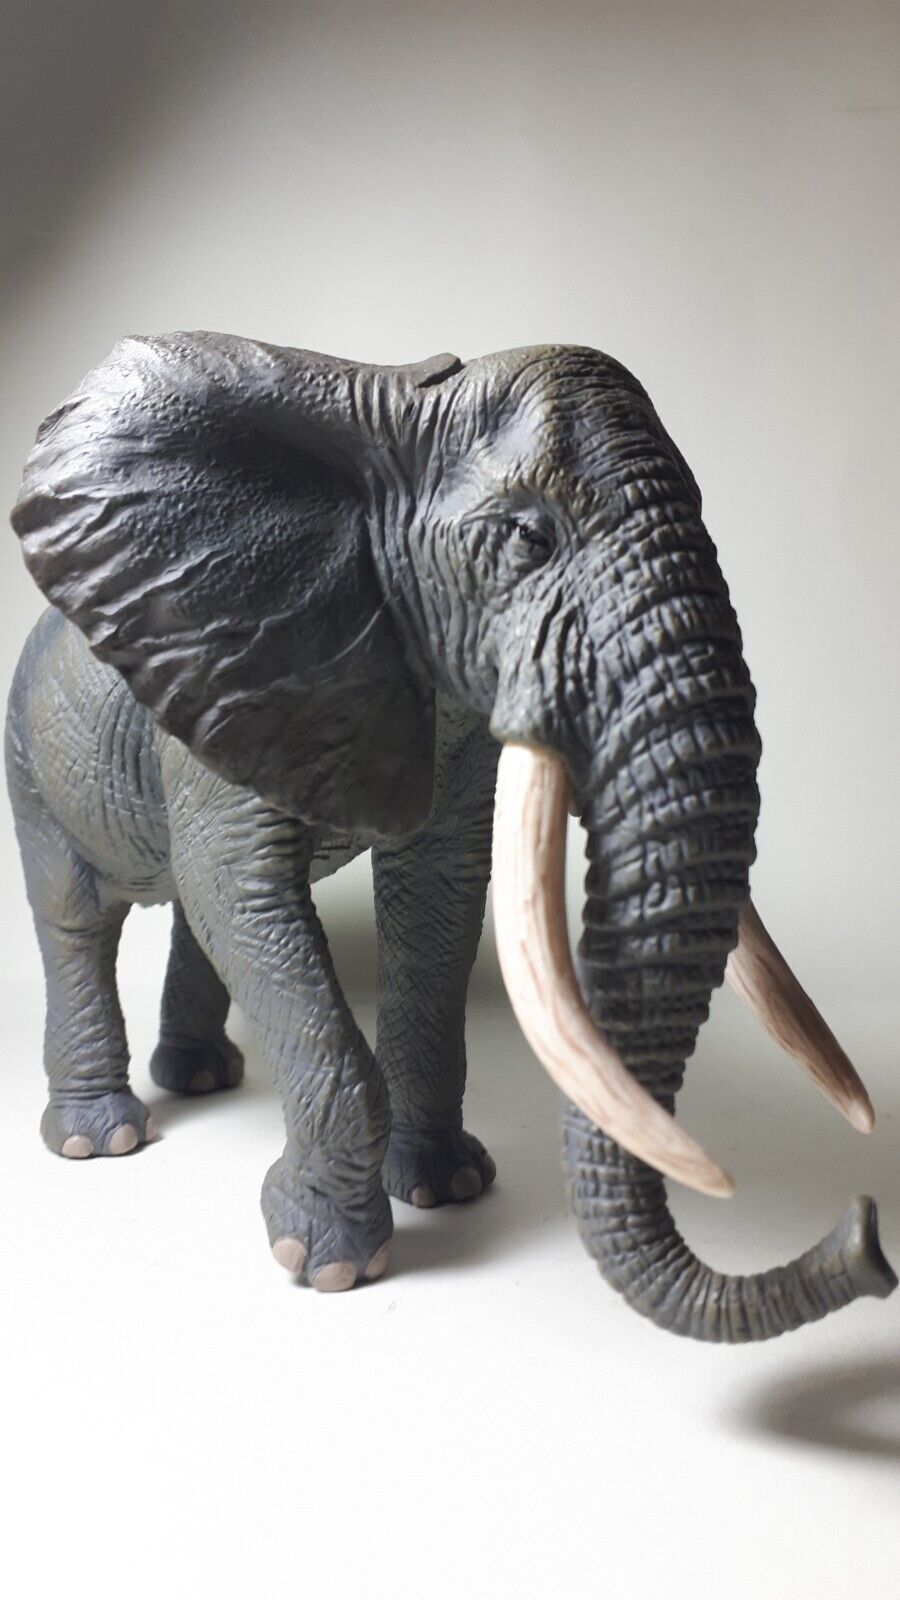 2022 NEW Collecta Animal Toy / Figure African Bush Elephant | eBay